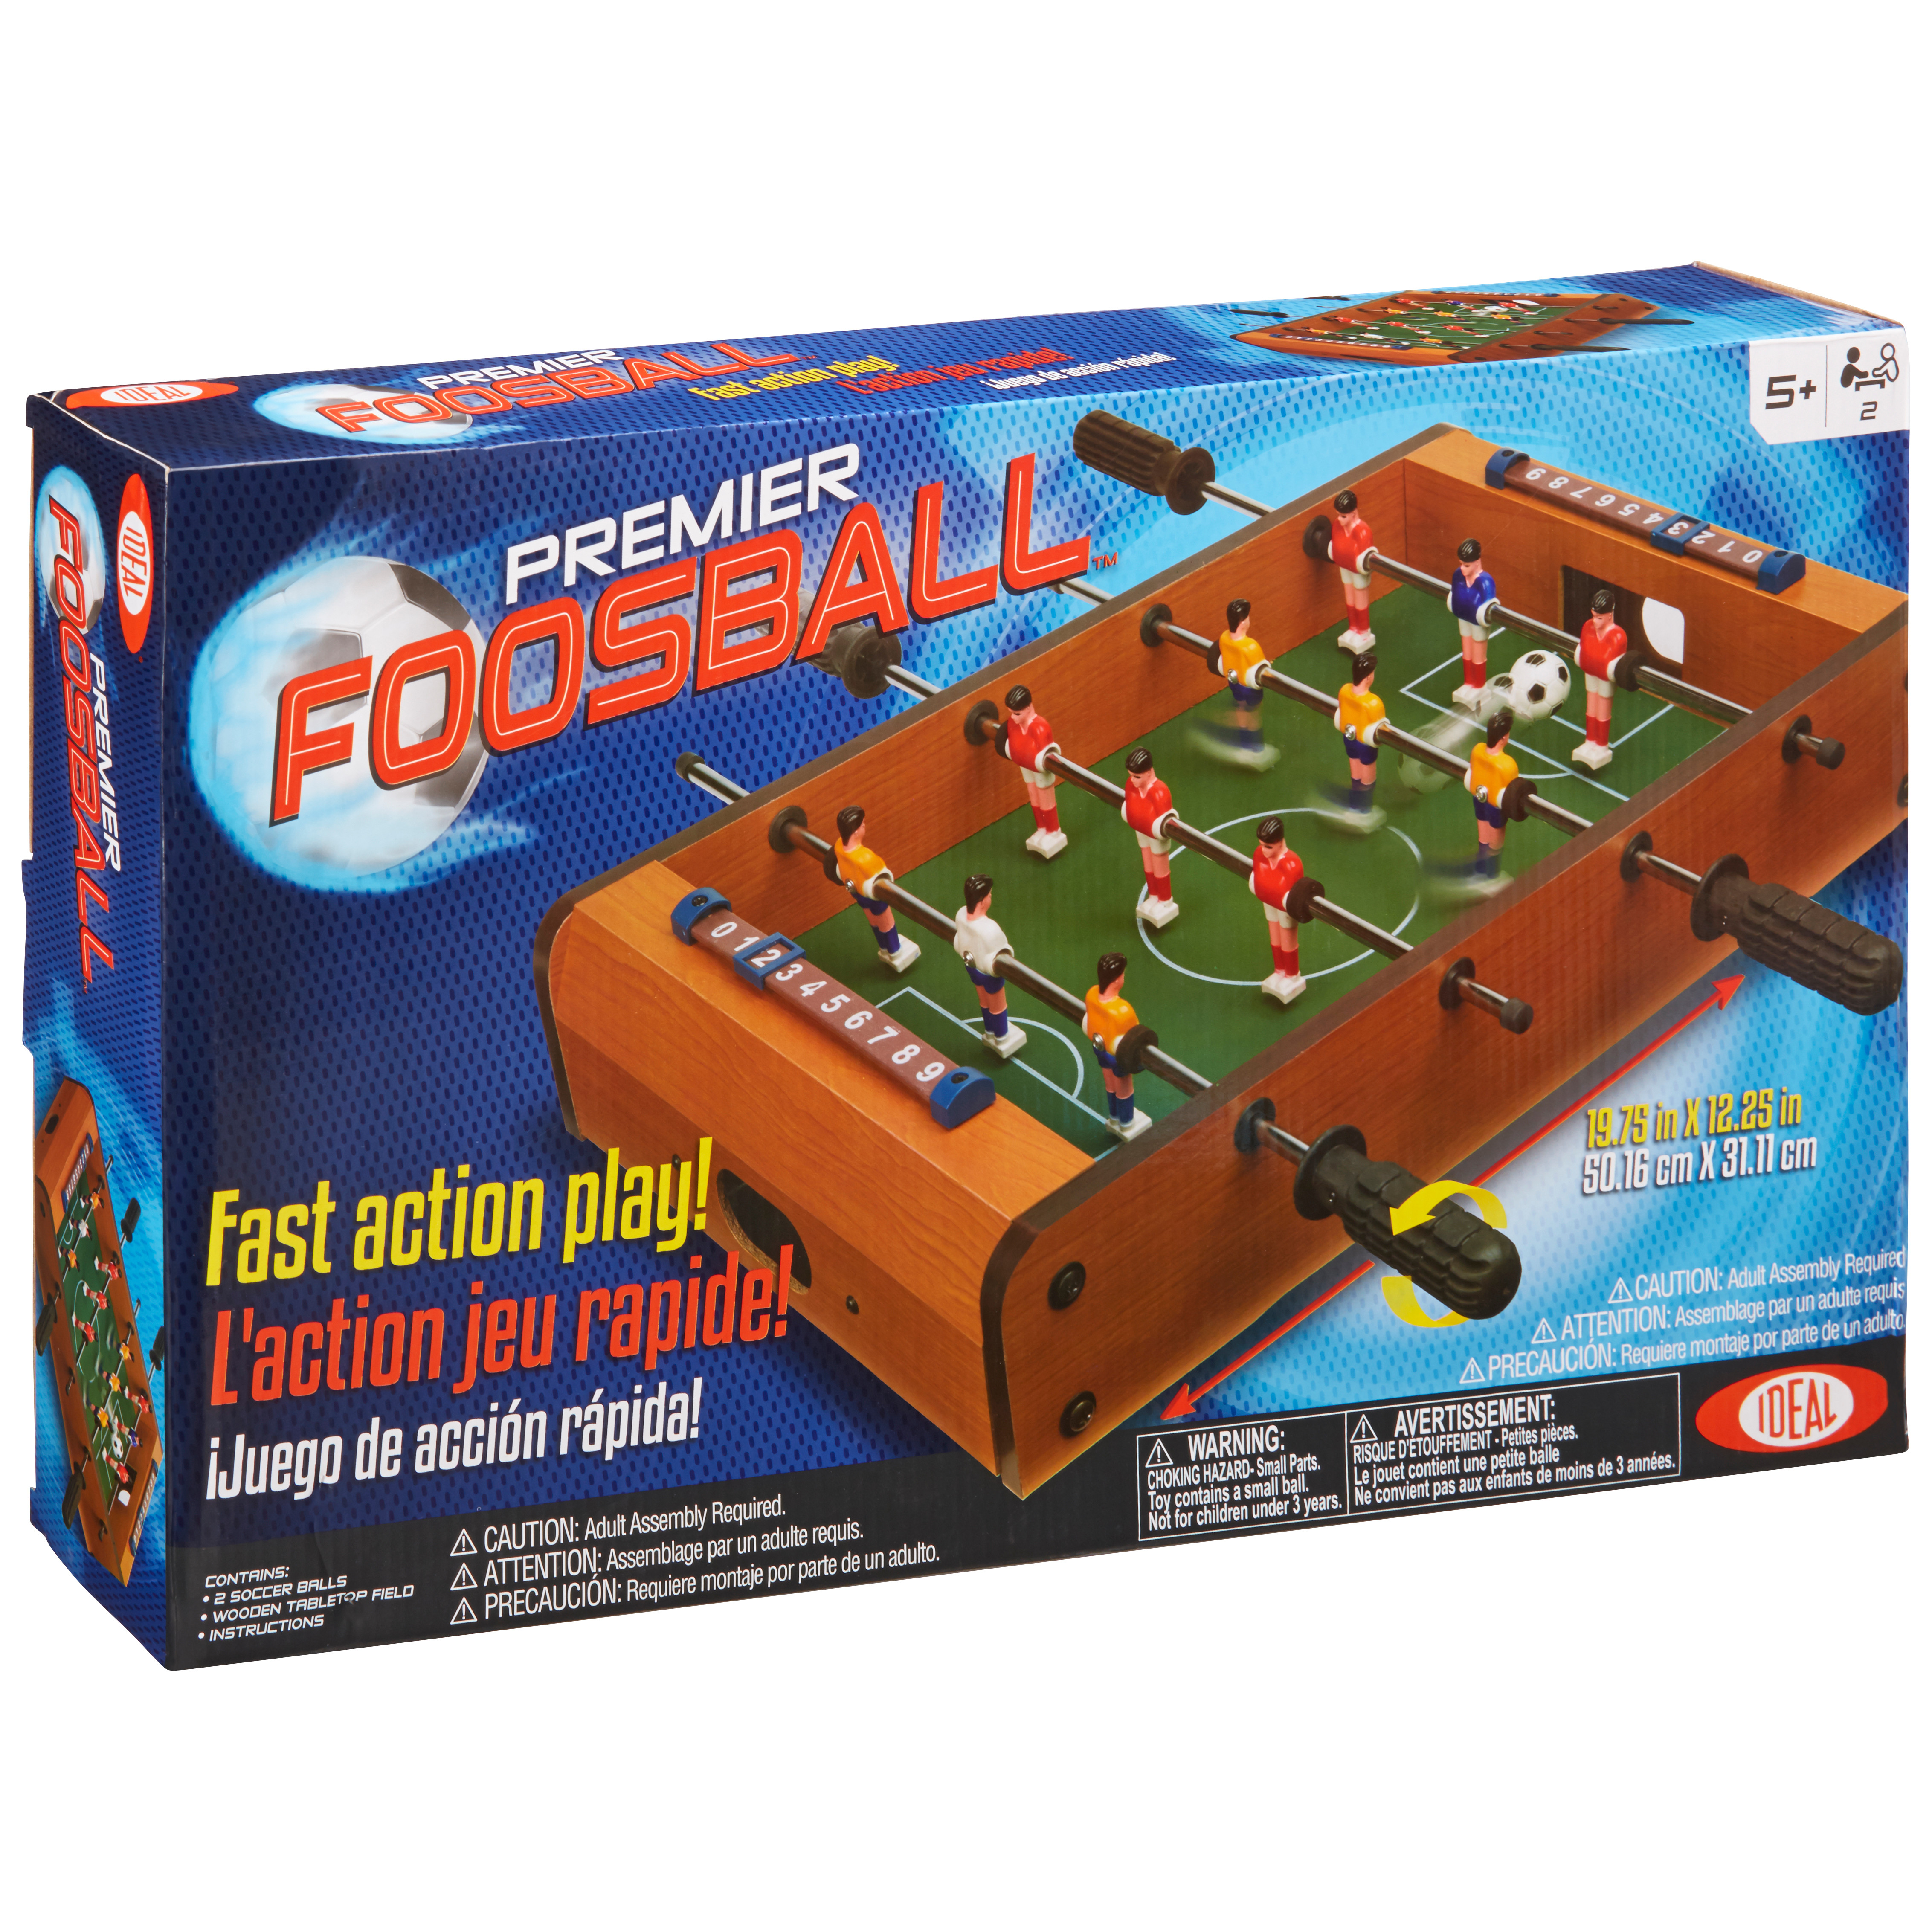 Ideal Premier Foosball Tabletop Game - image 1 of 4